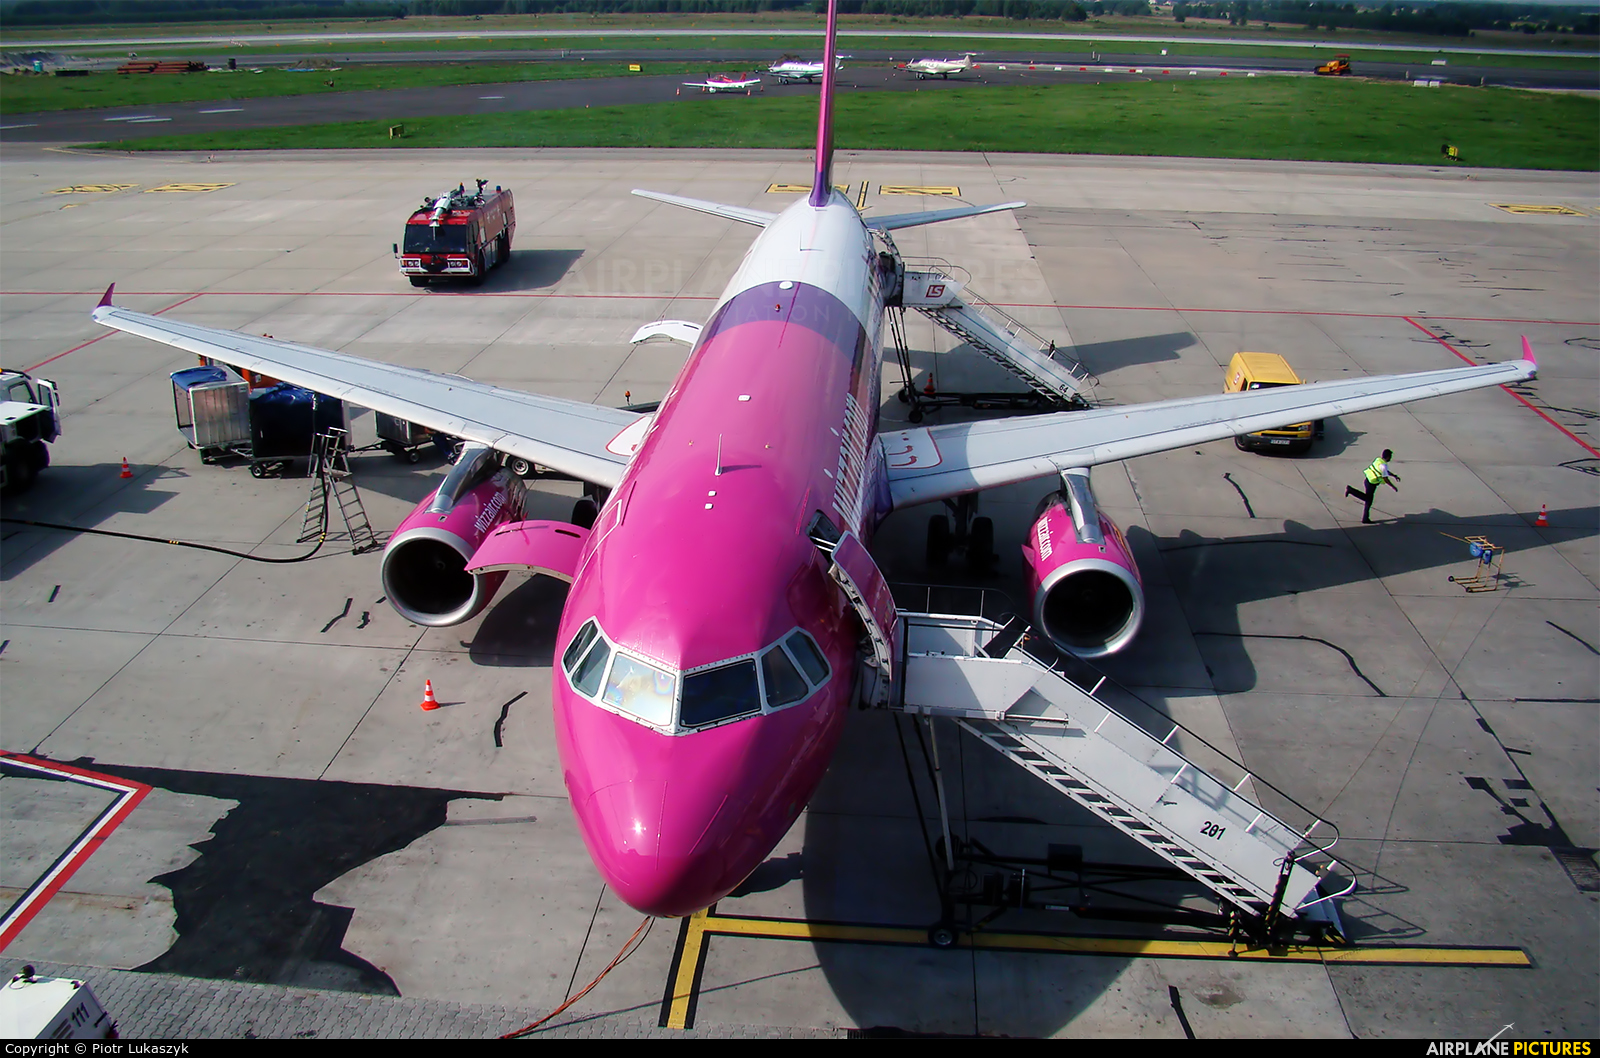 Wizz Air HA-LPN aircraft at Katowice - Pyrzowice